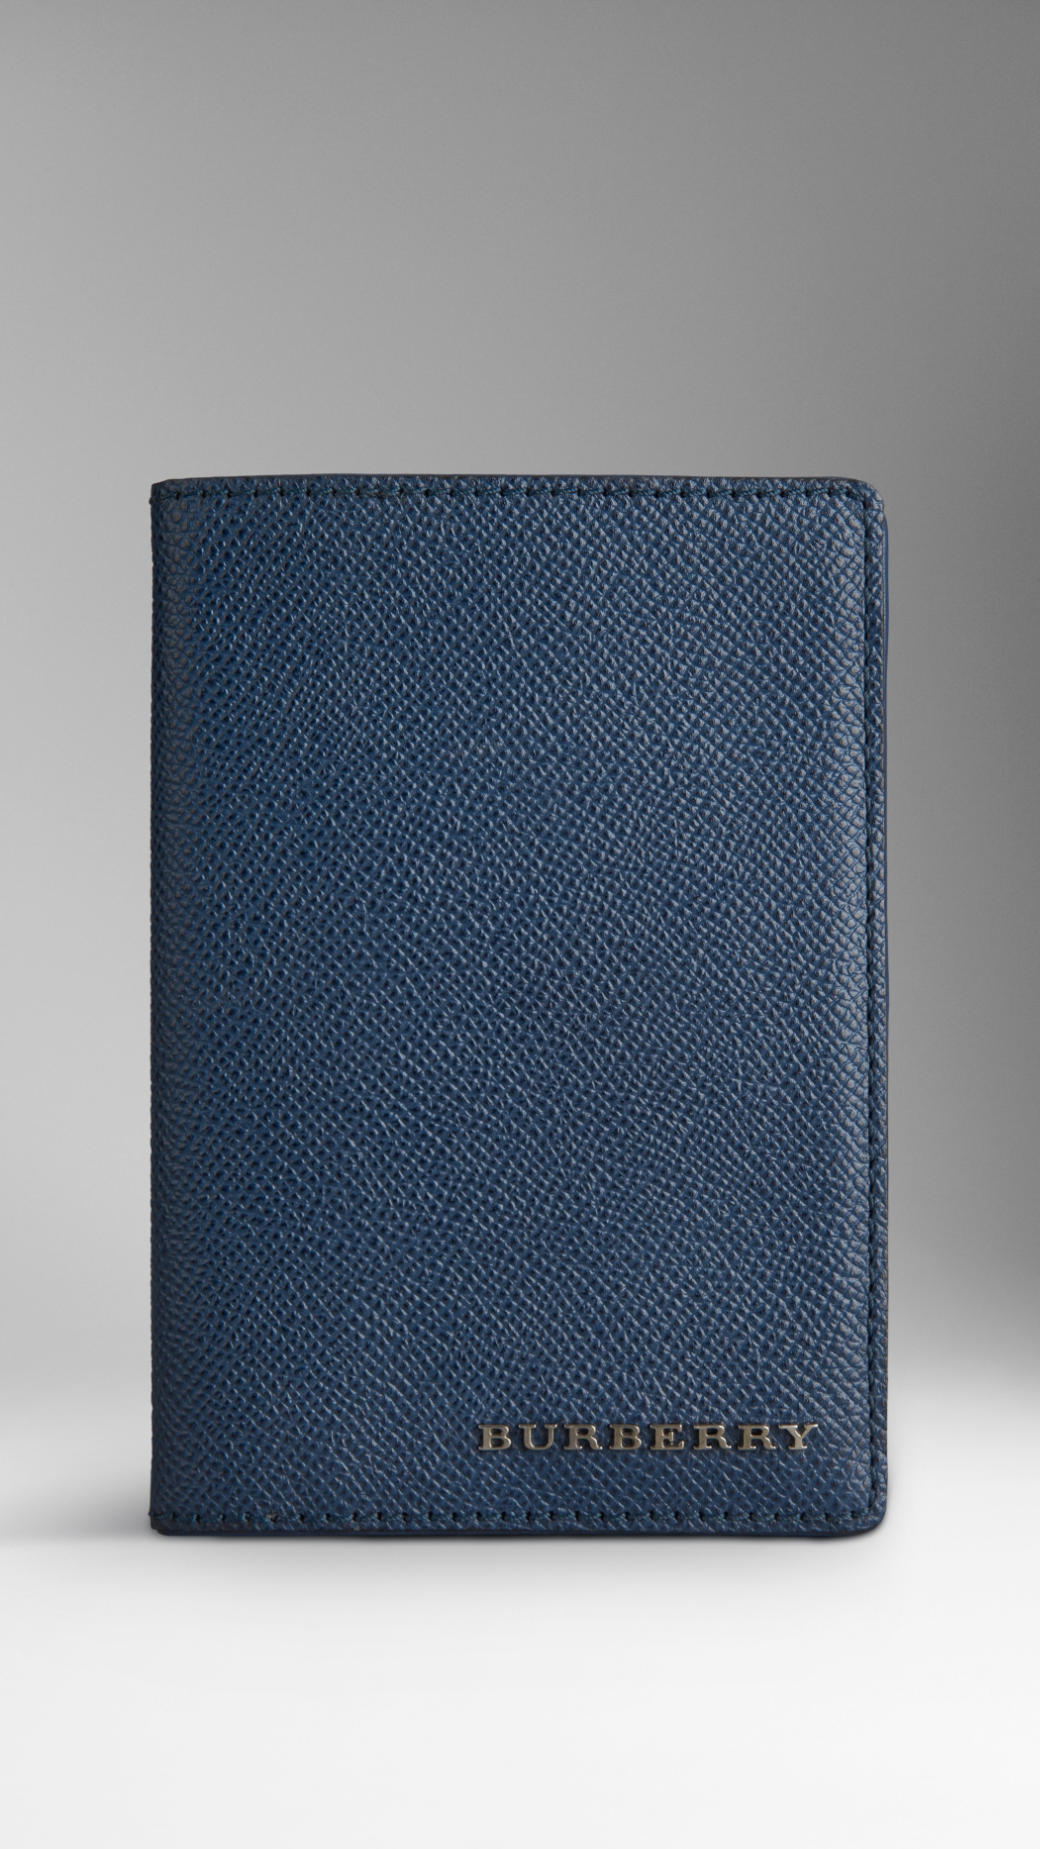 Burberry London Leather Passport Holder 